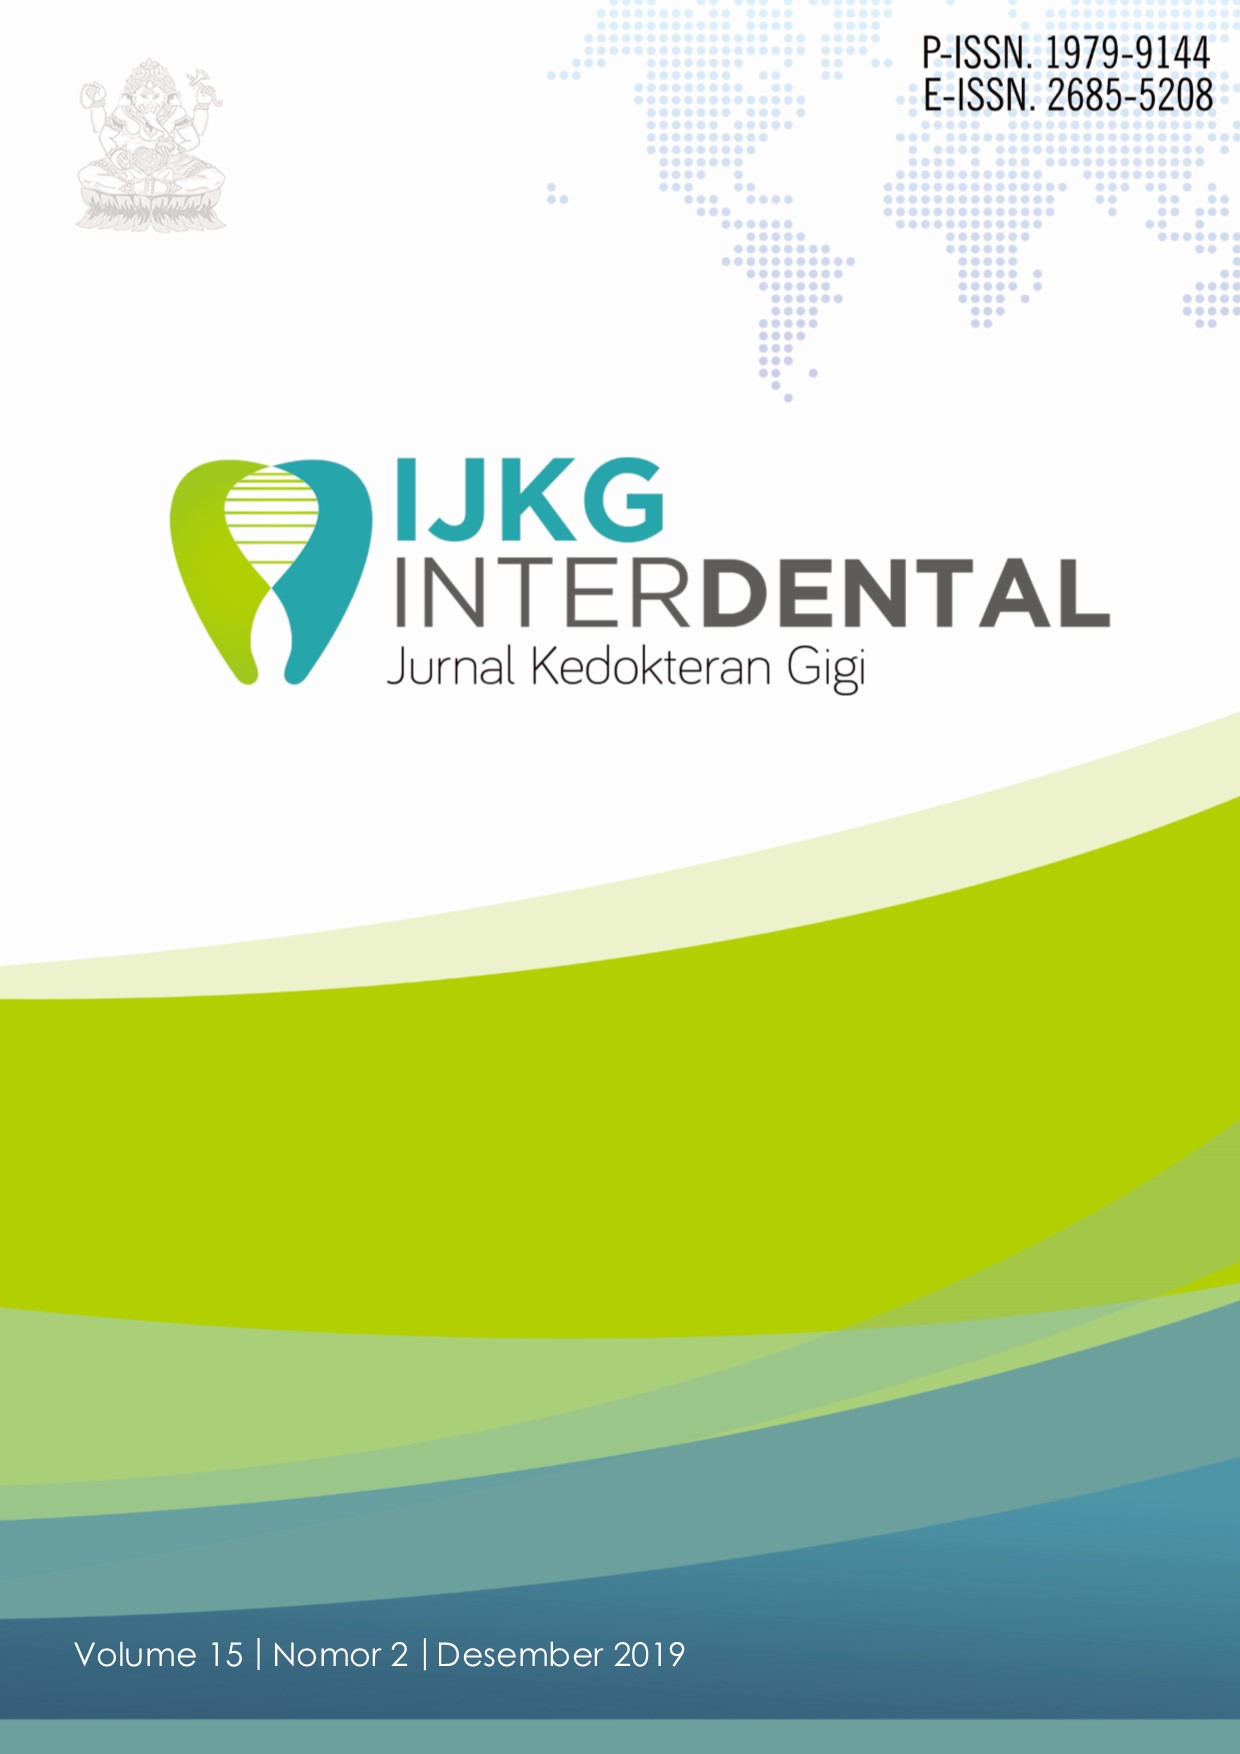 					View Vol. 15 No. 2 (2019): Interdental Jurnal Kedokteran Gigi (IJKG)
				